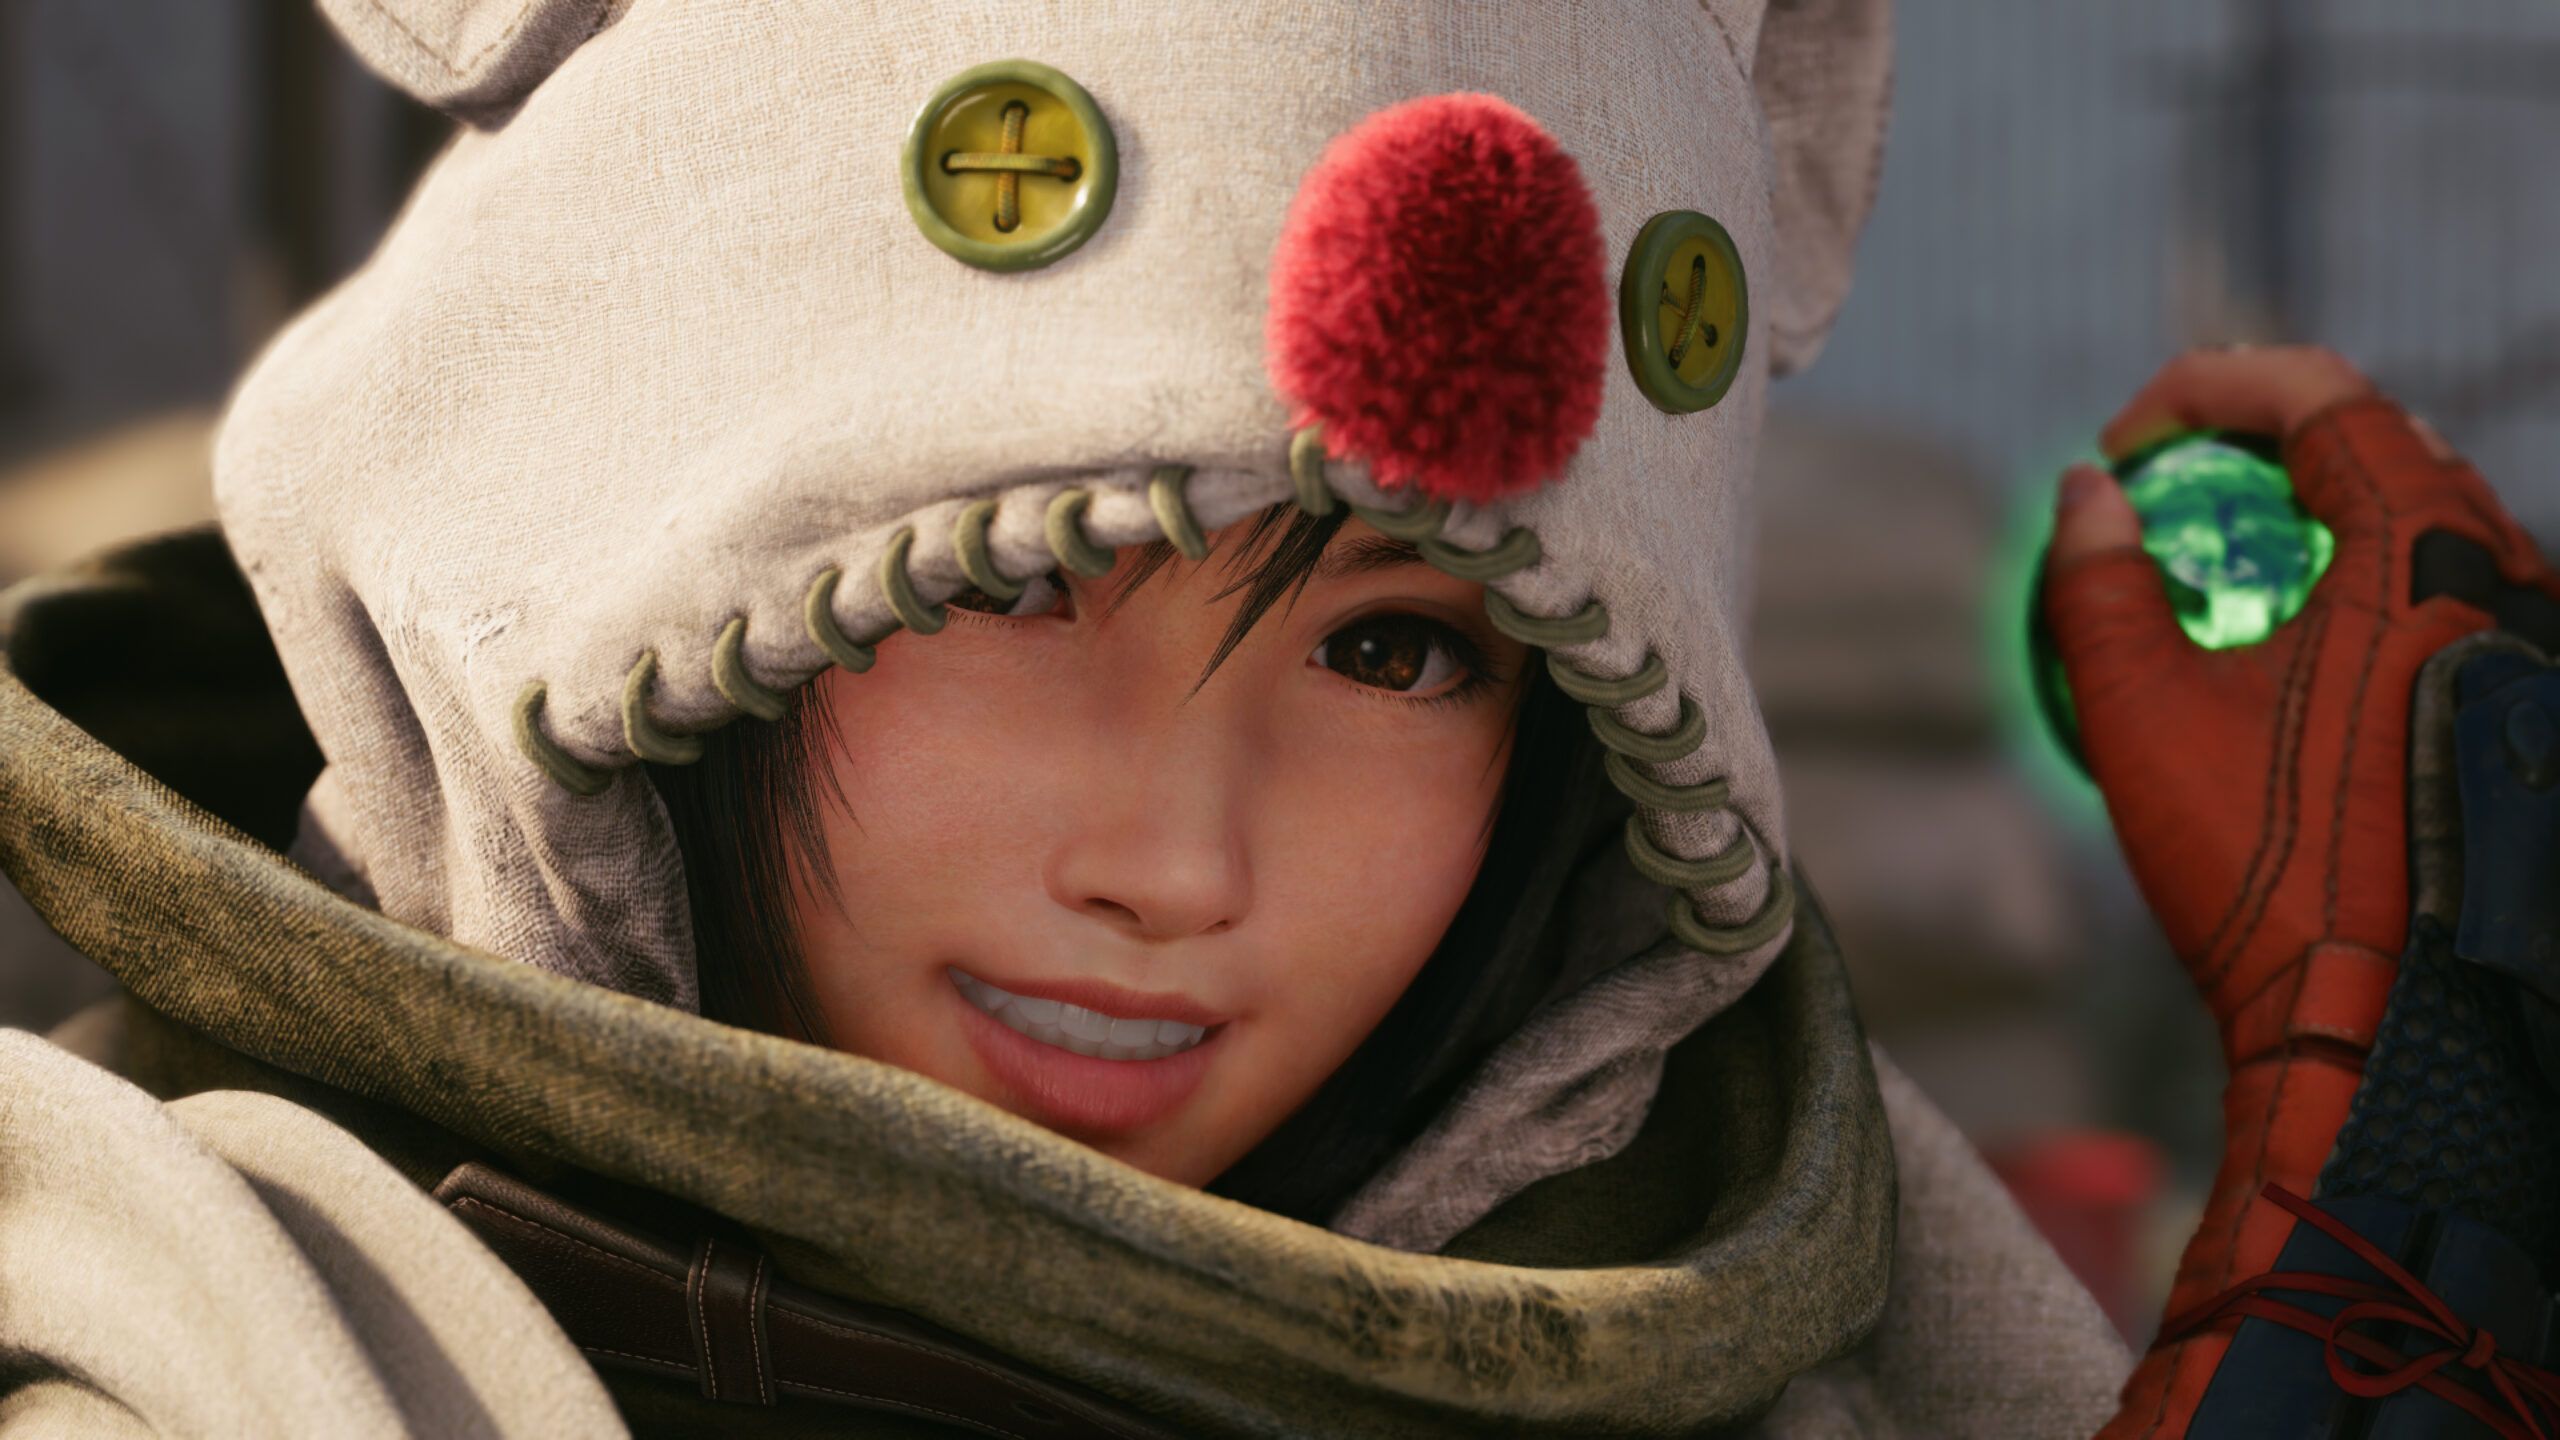 Final Fantasy 7 Remake PS5 Yuffie Kisaragi square enix ff7r screenshots 1 voice actor